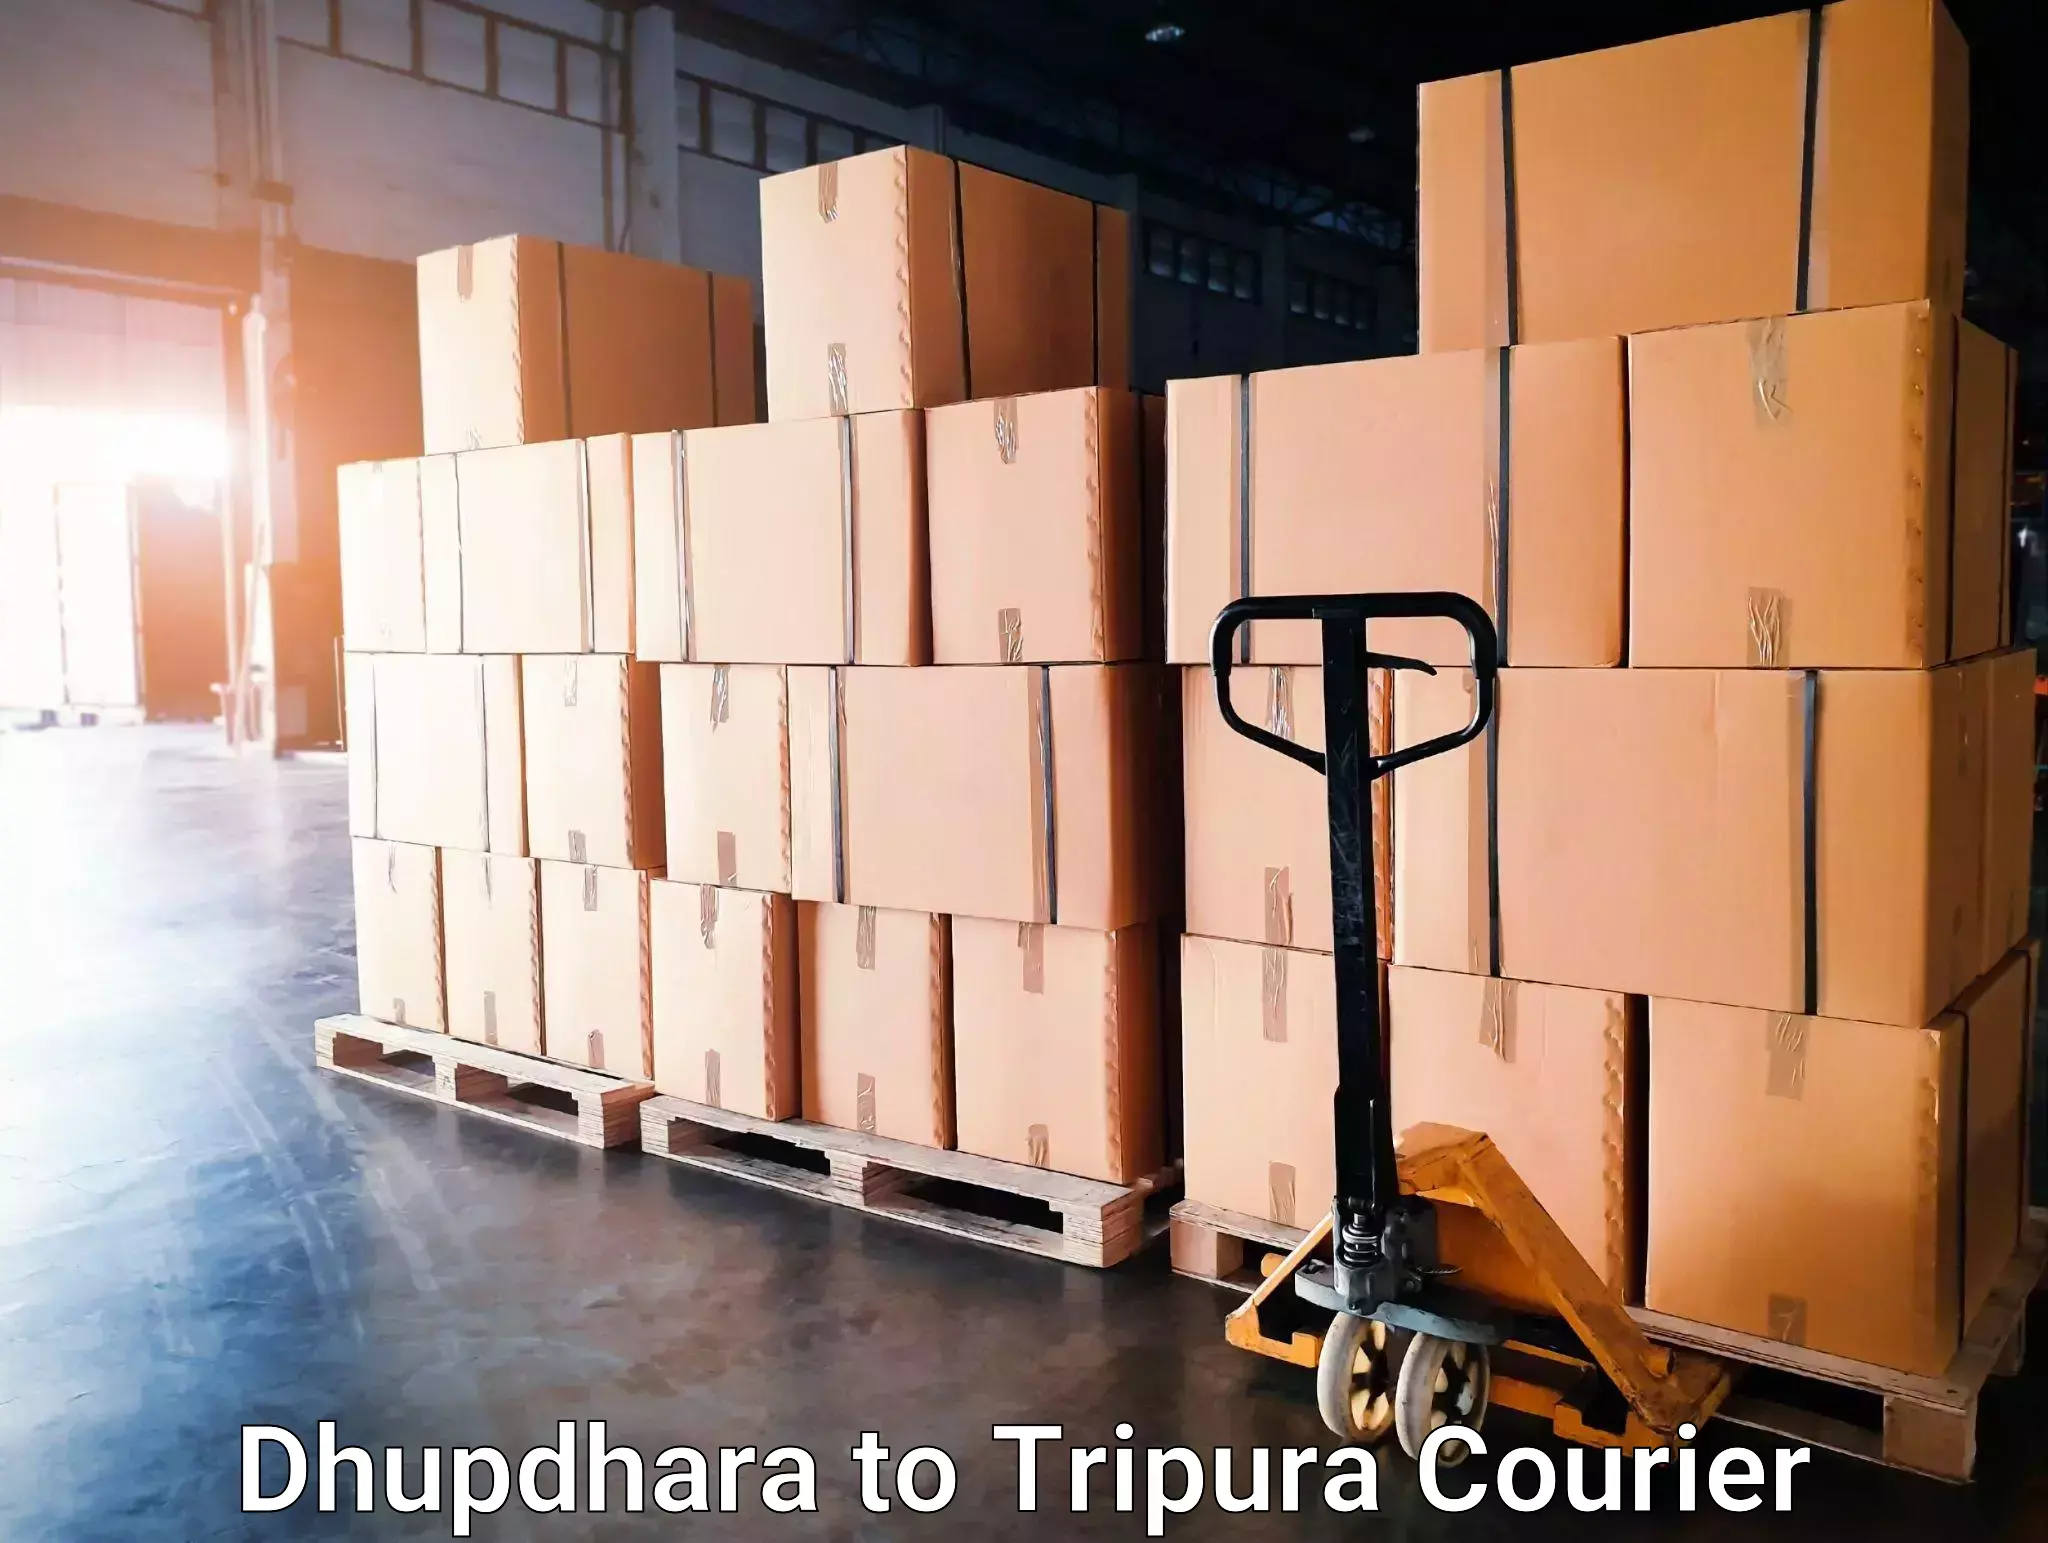 Advanced tracking systems Dhupdhara to Udaipur Tripura